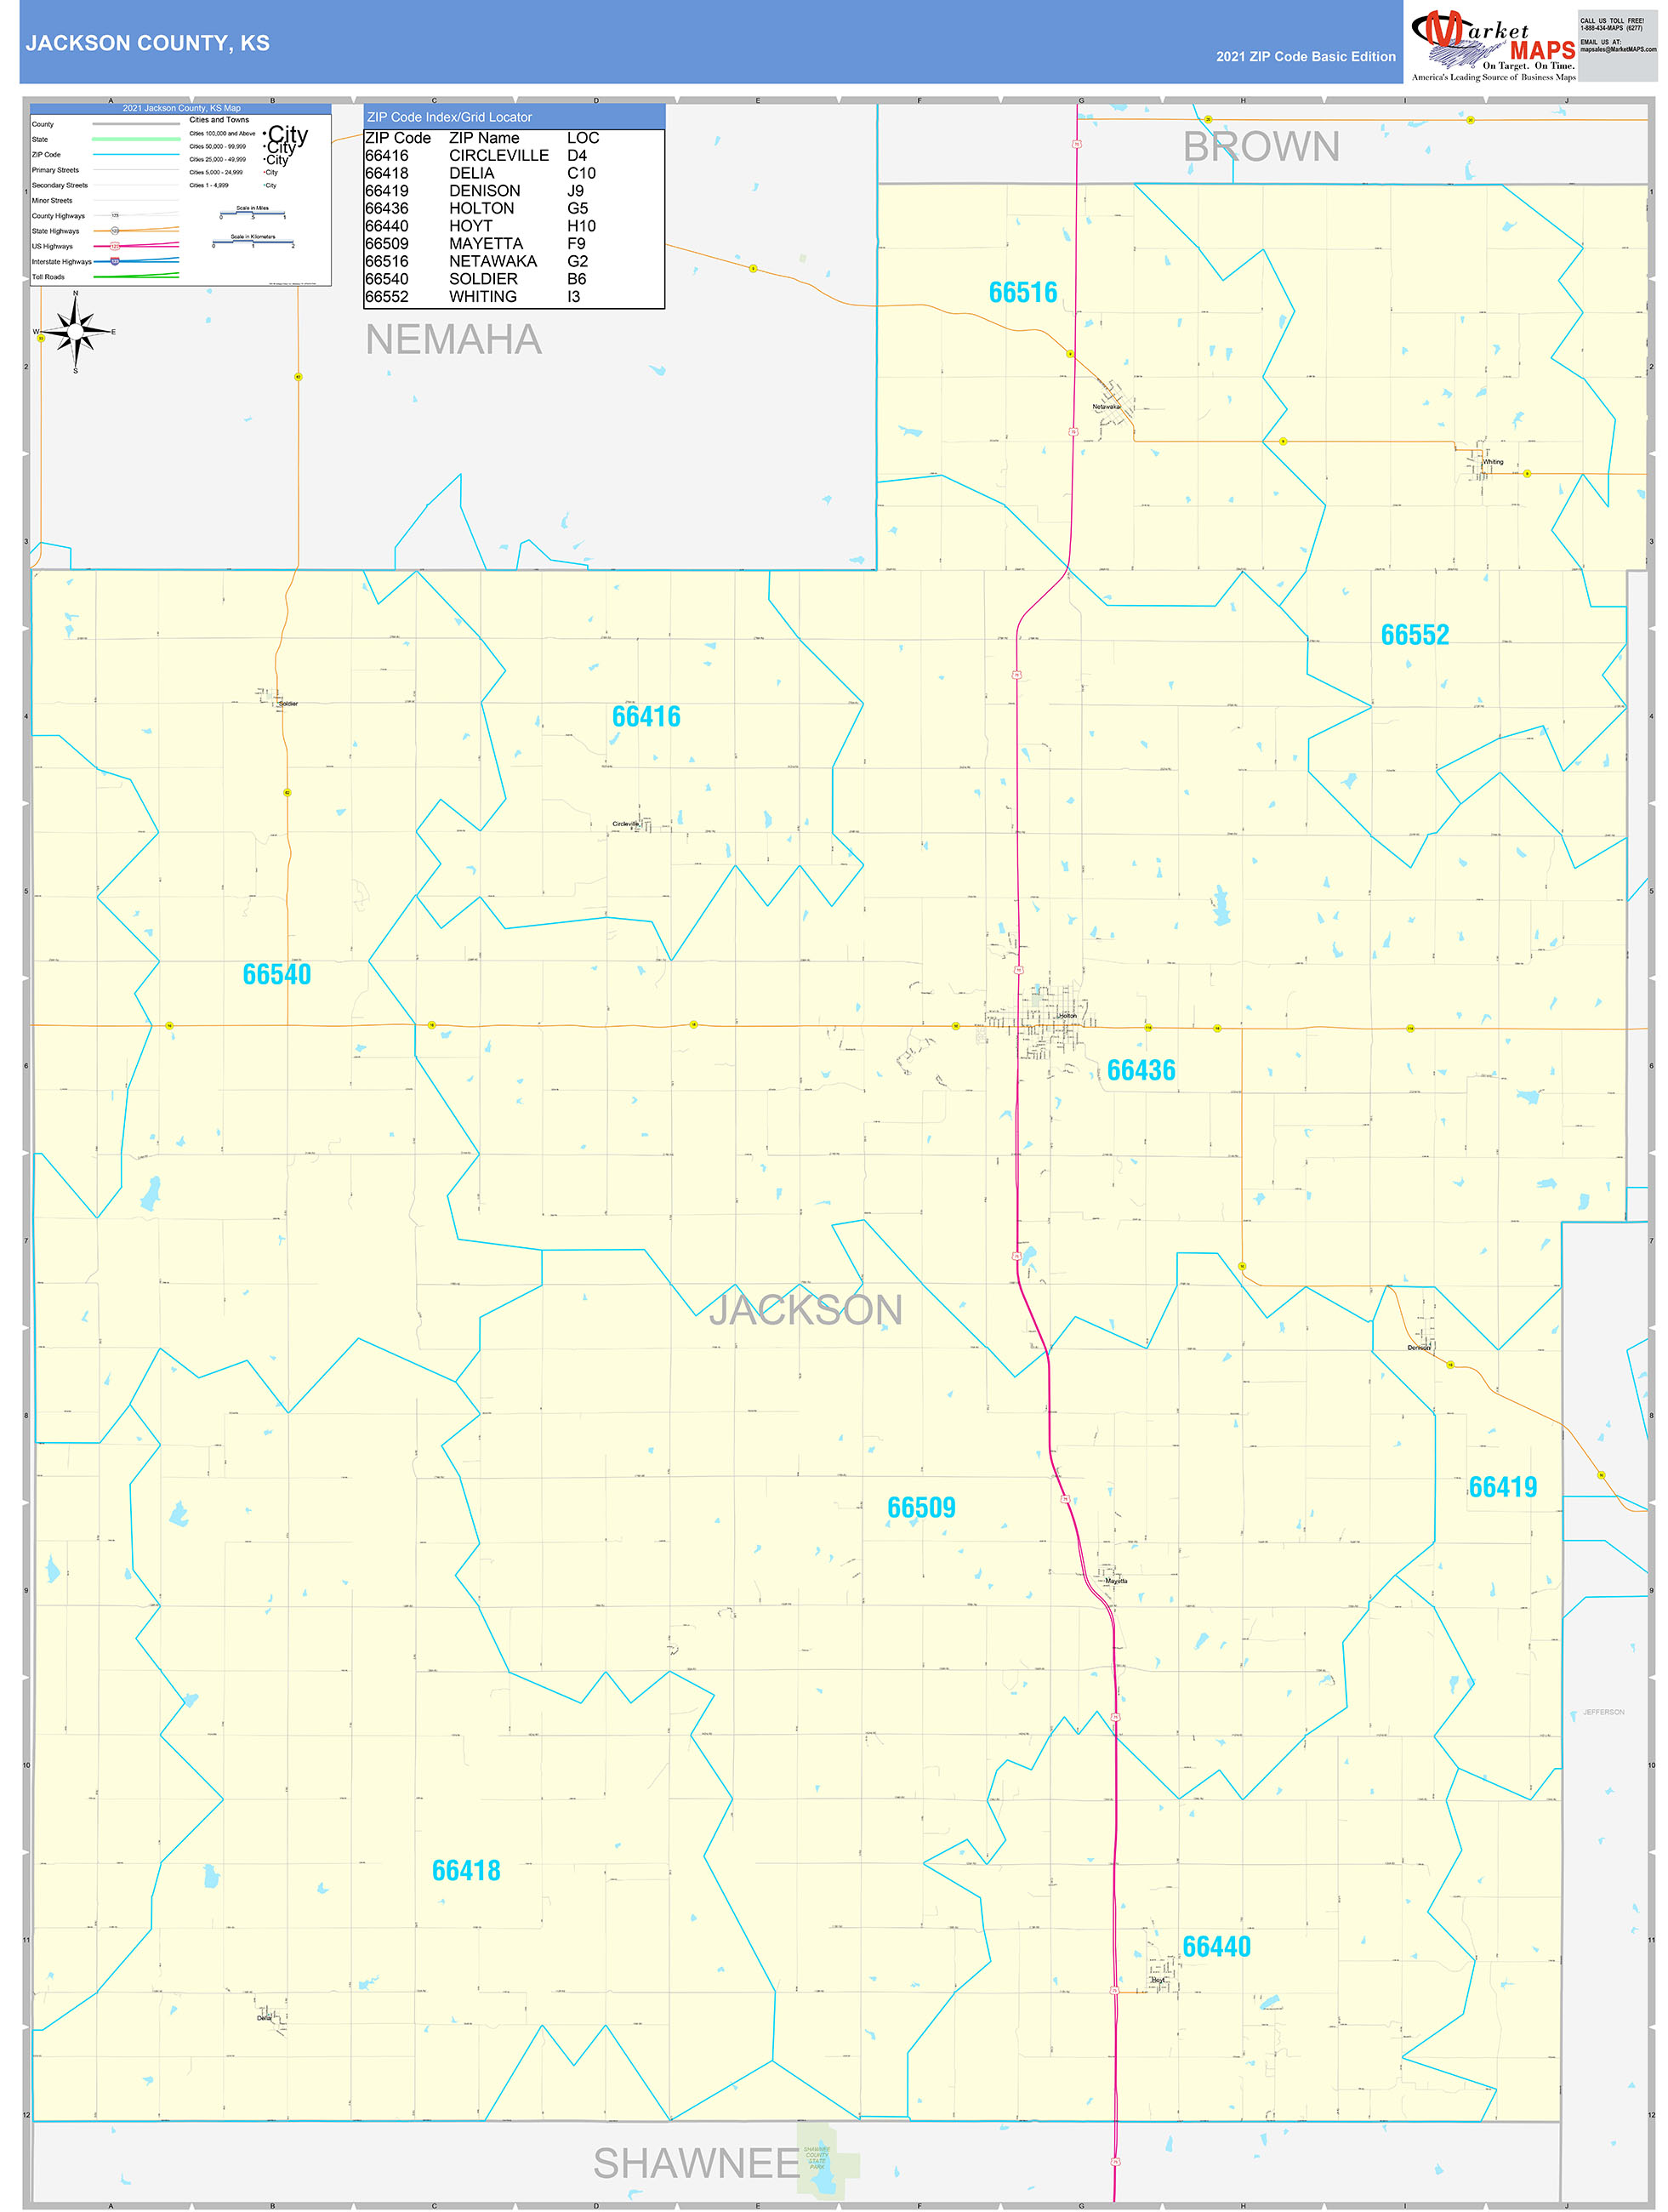 Jackson County, KS Zip Code Wall Map Basic Style by MarketMAPS MapSales